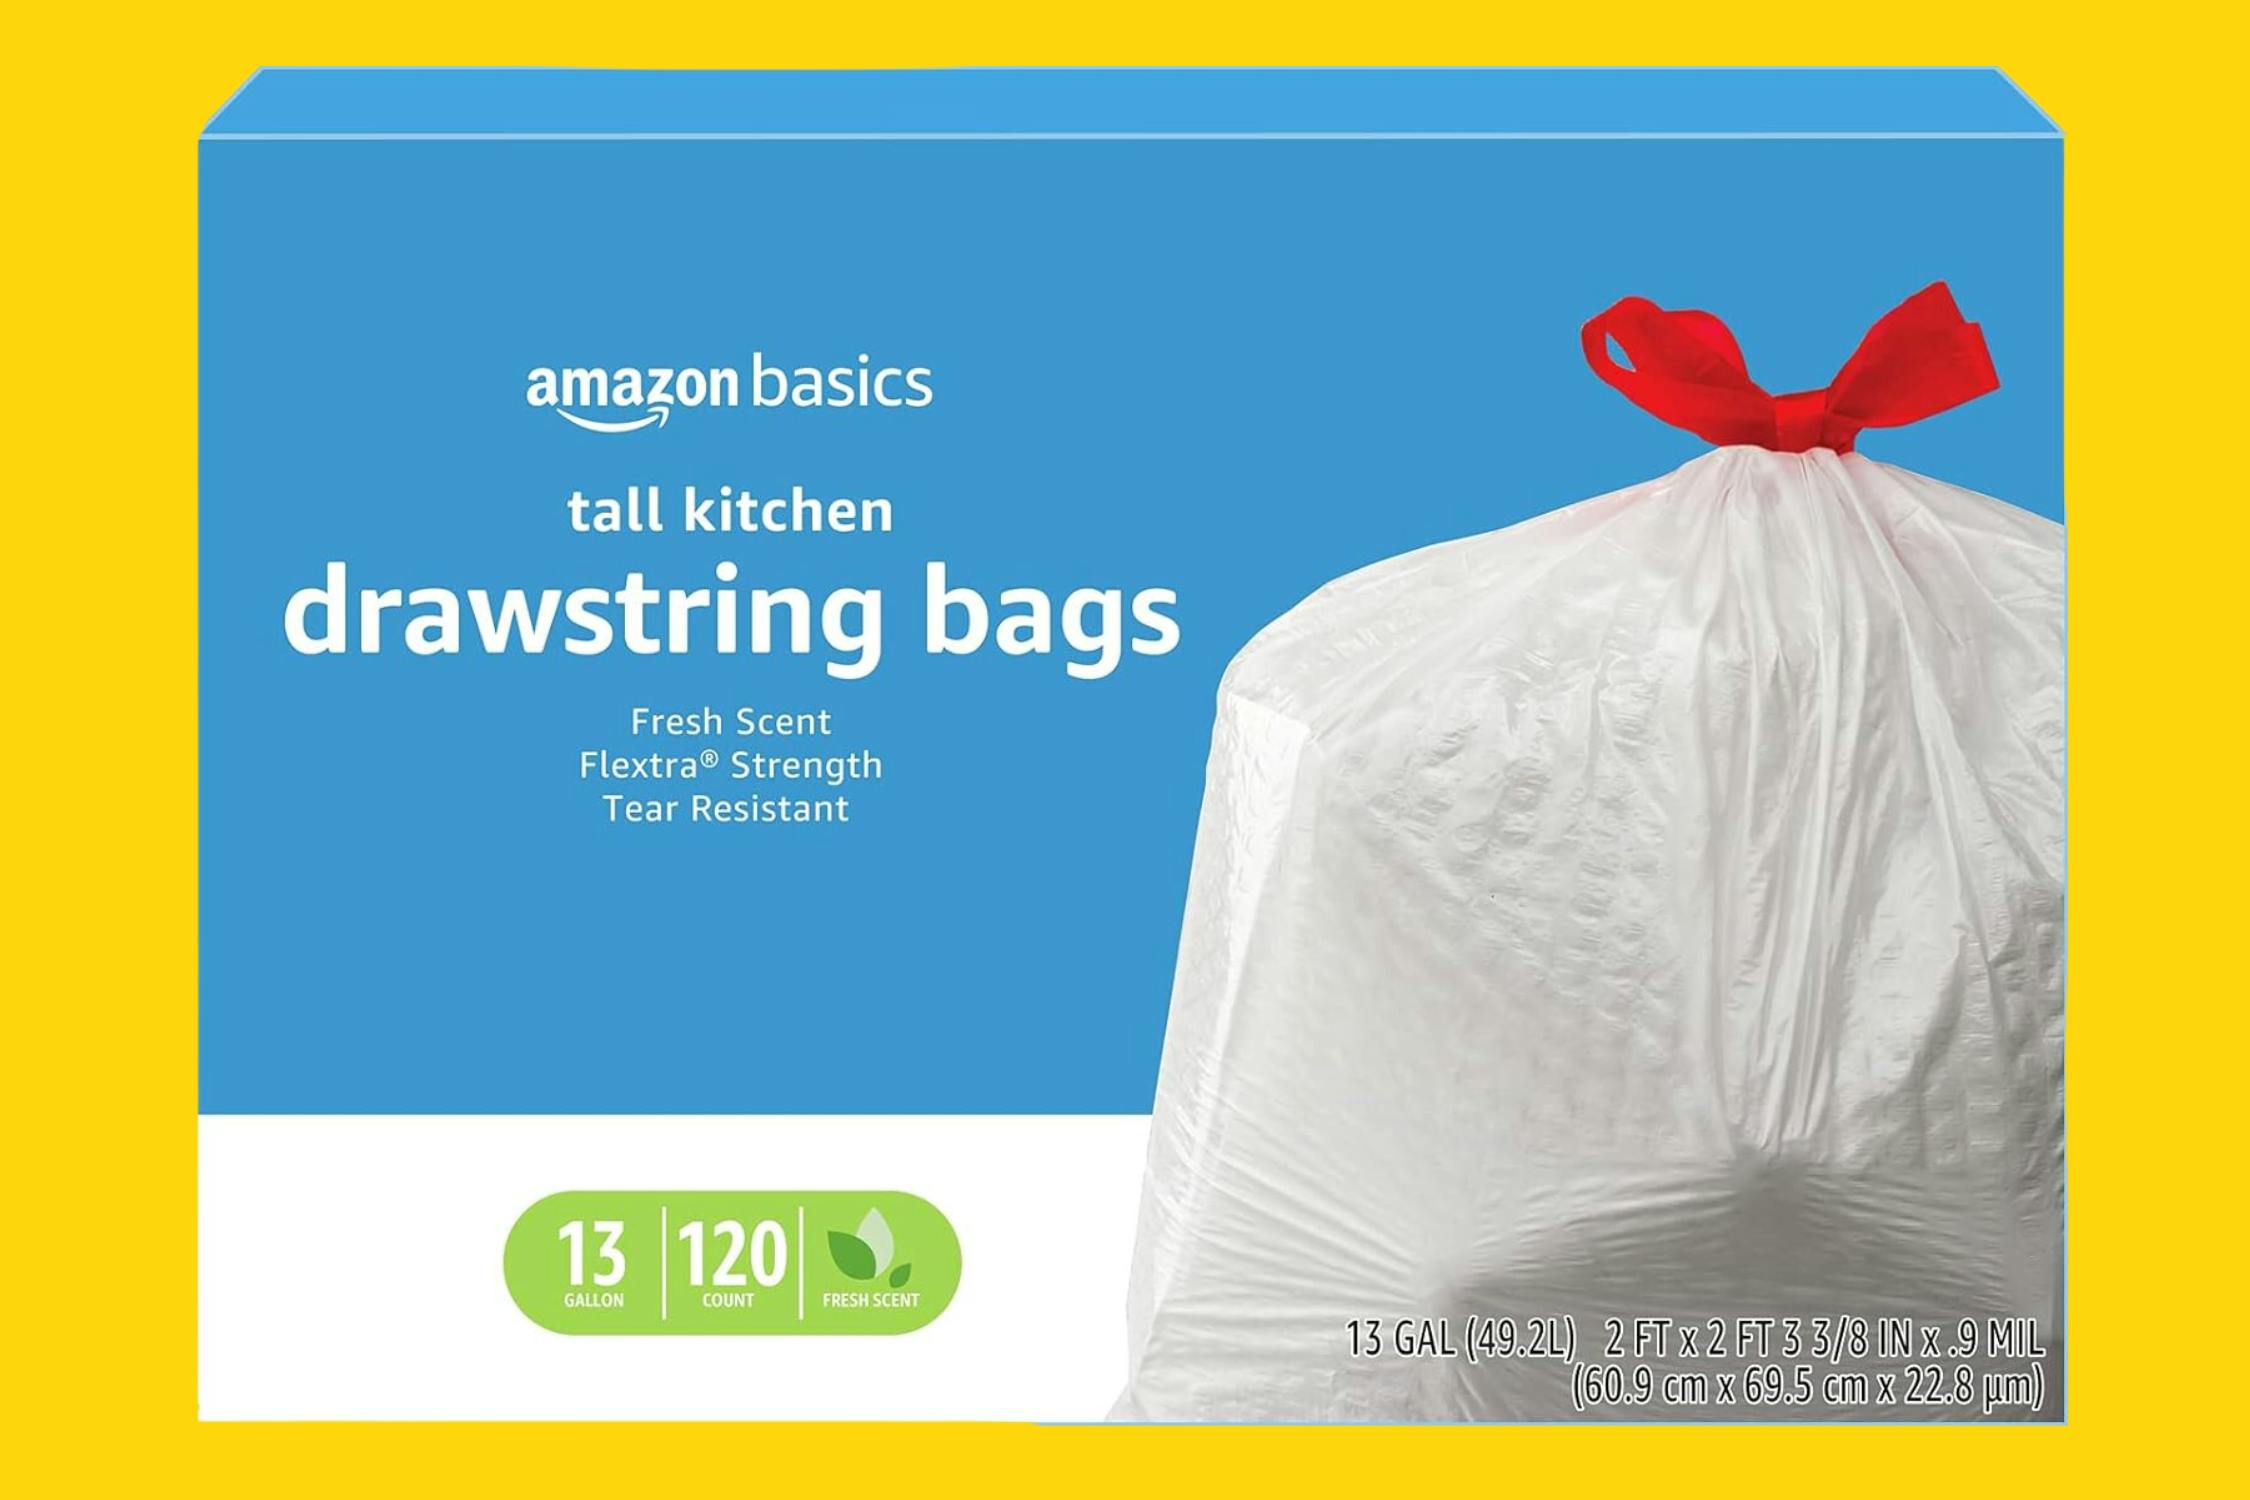 Save $1.50 On Hefty® Trash Bags At Publix - iHeartPublix